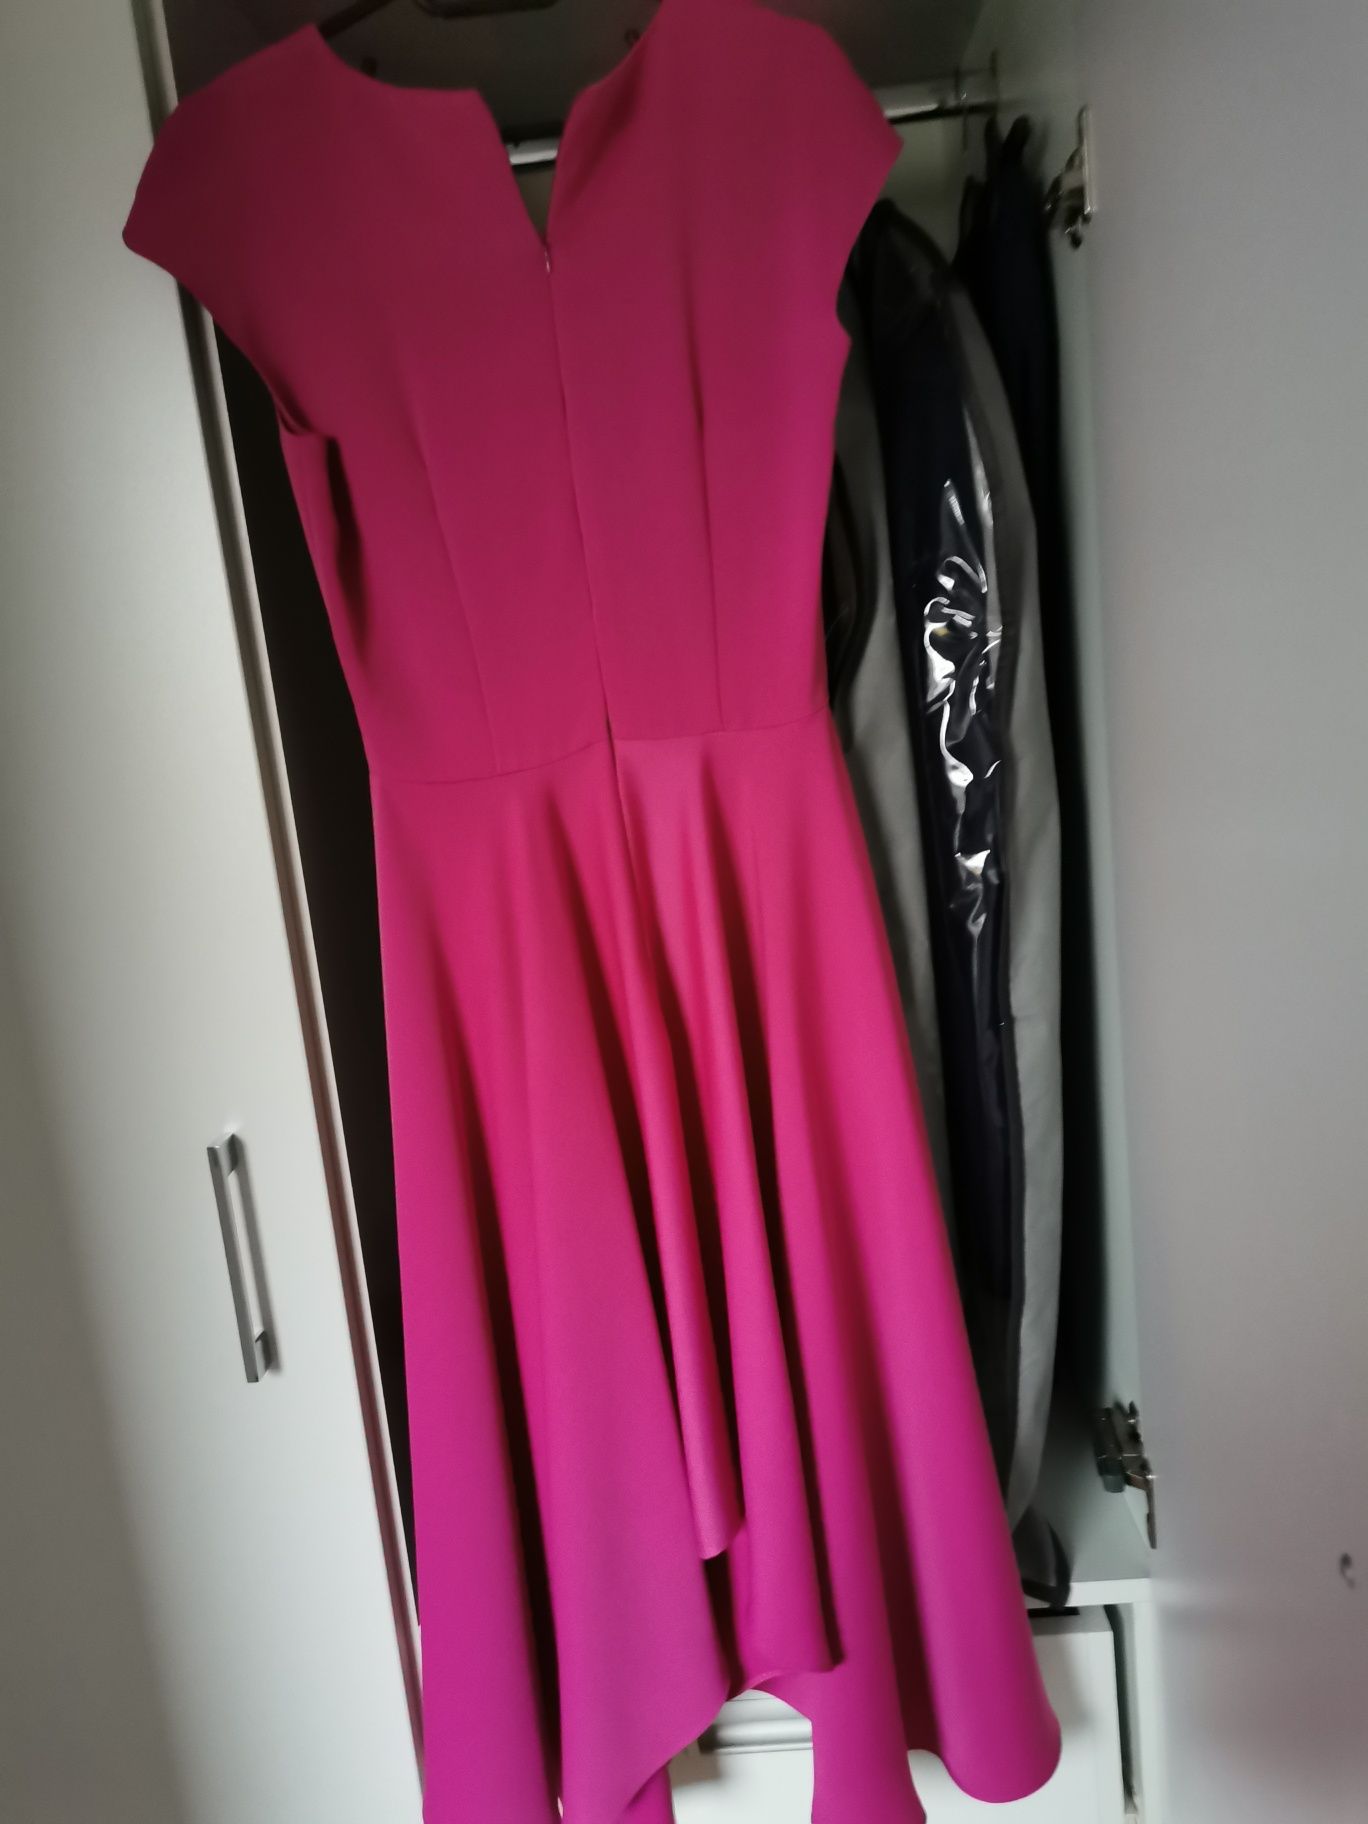 Vând rochie mov de lungime medie, în colturi laterale, marca Brise.